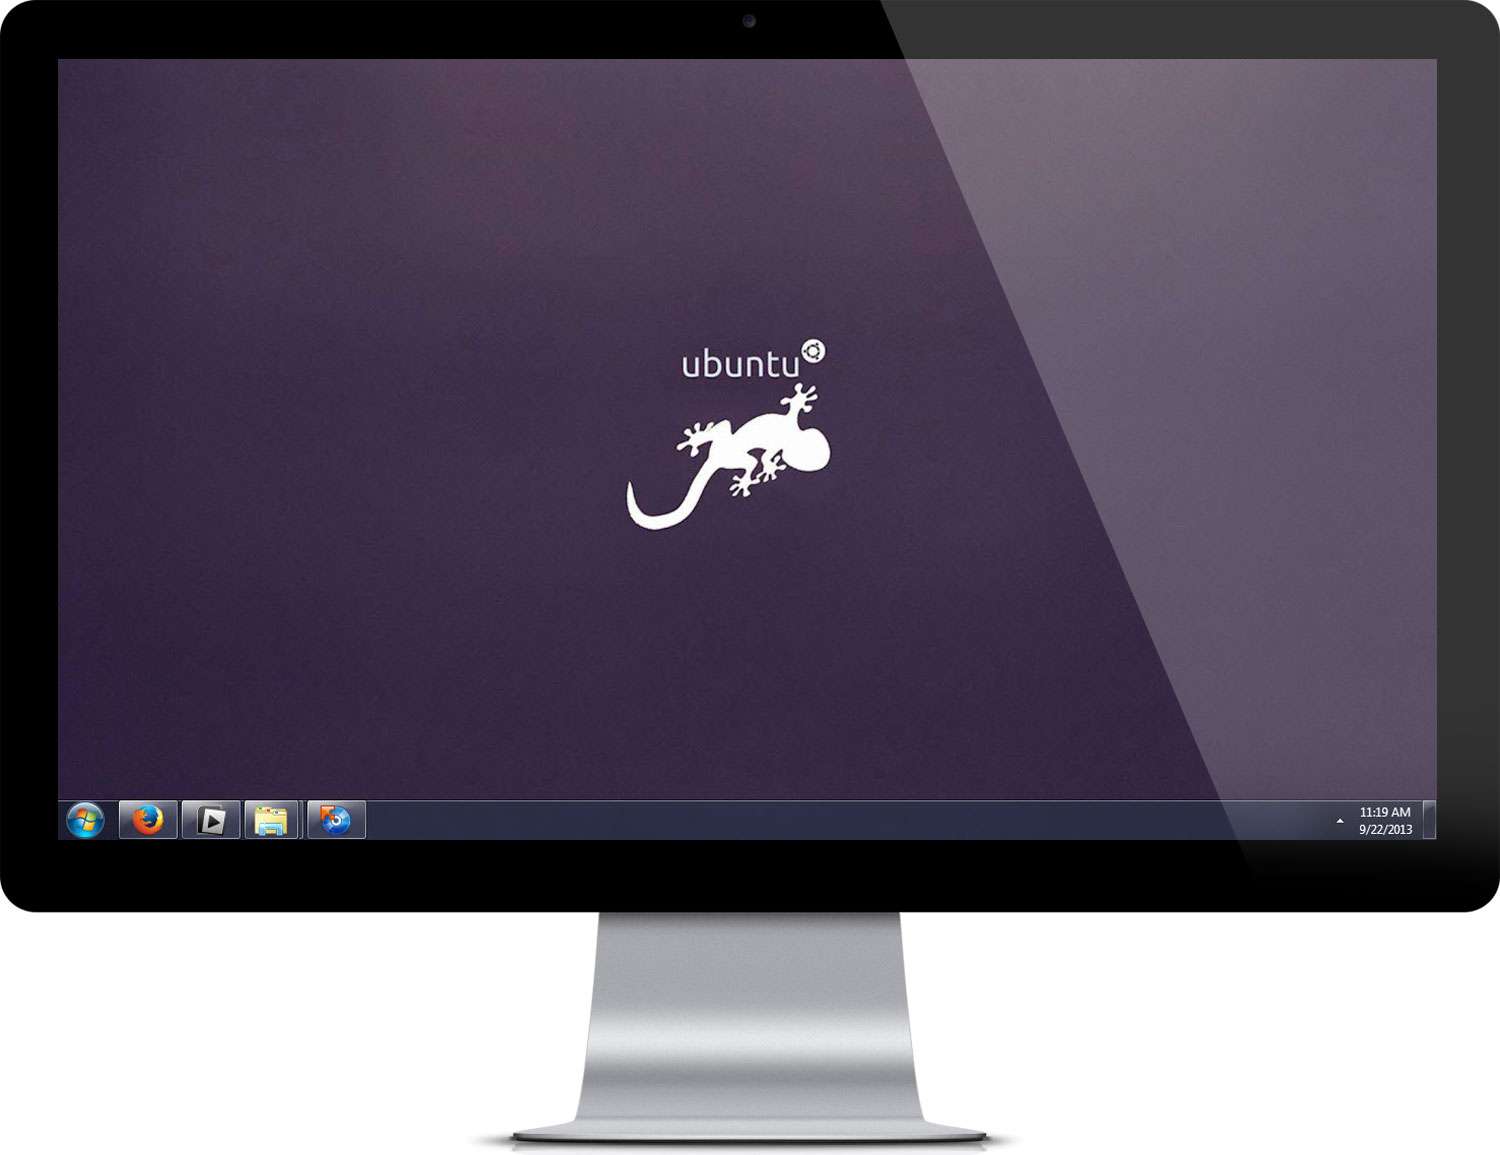 Ubuntu 1310 Theme For Windows 7 And Windows 8